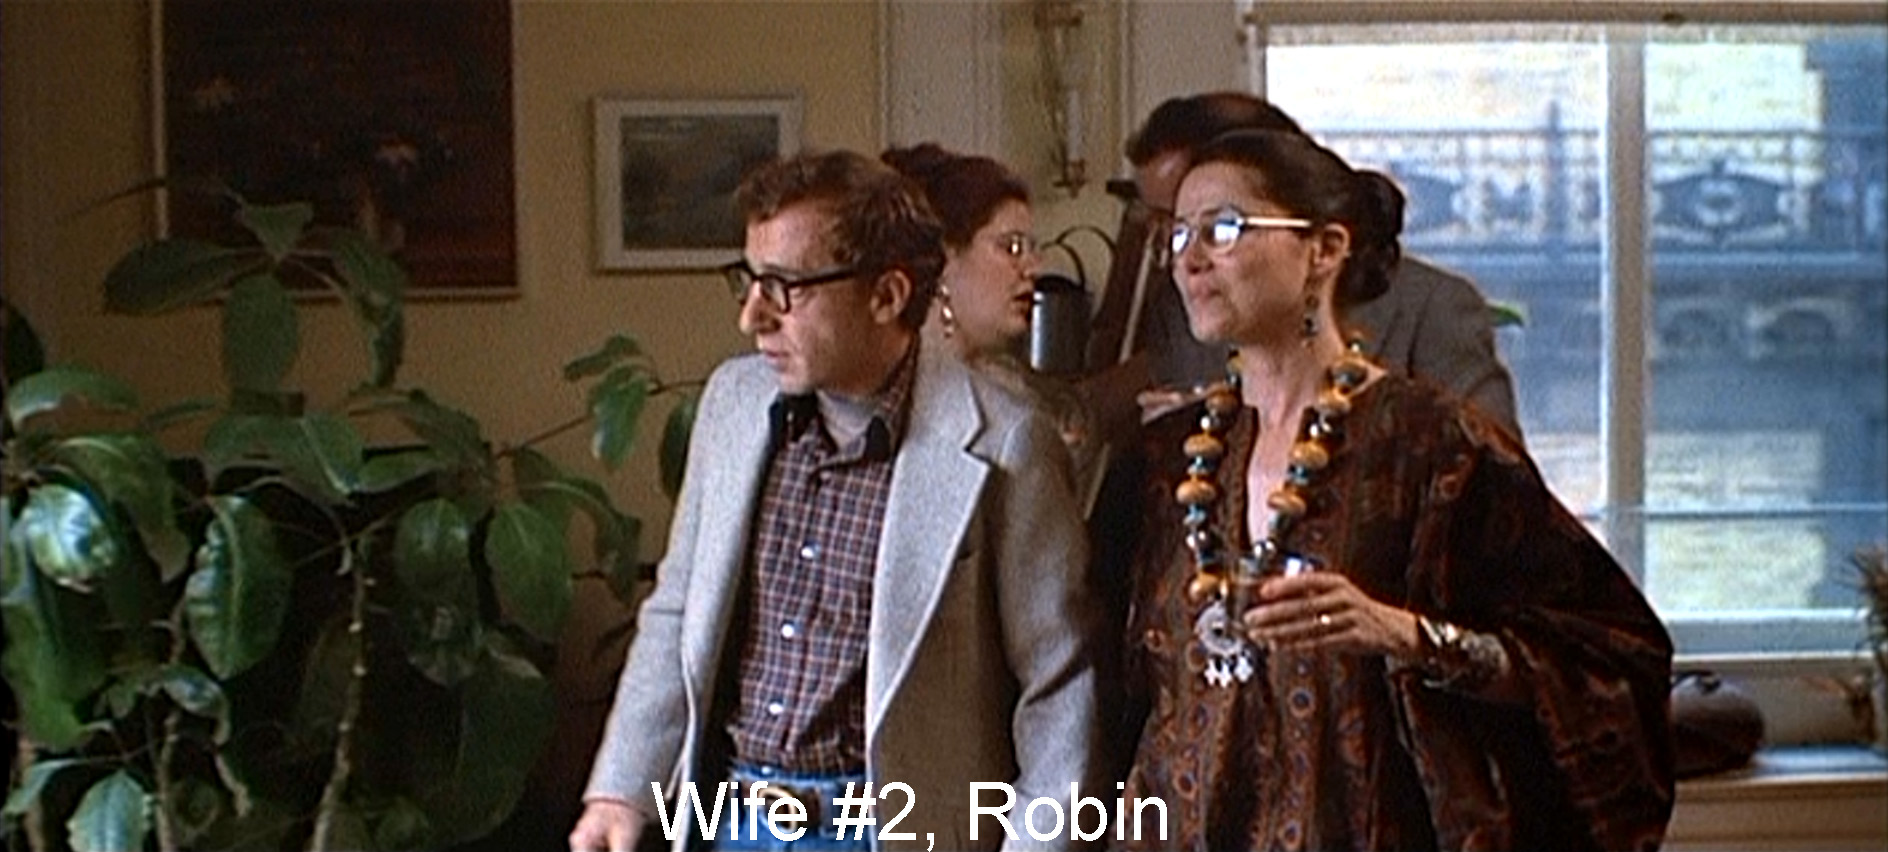  Wife #2: Robin